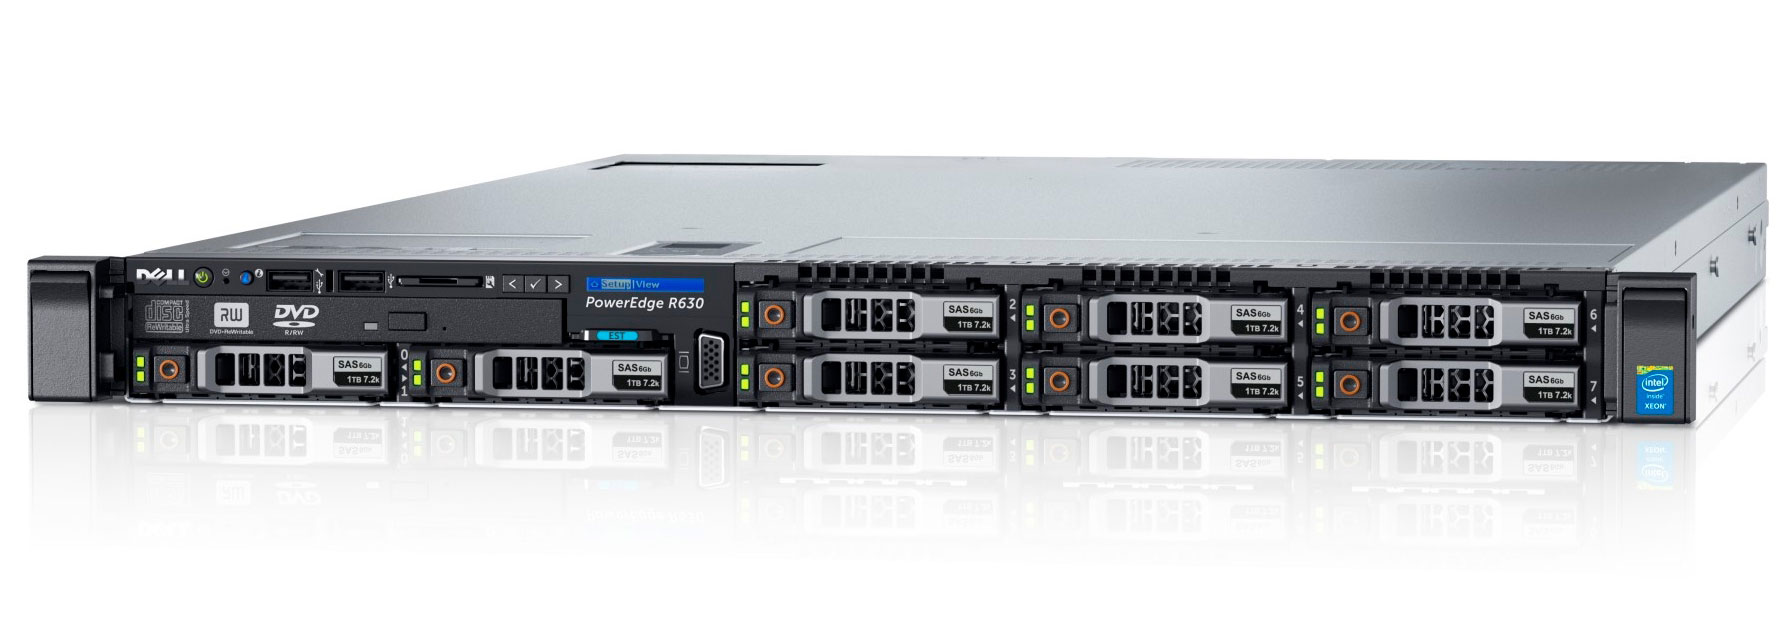 Подробное фото Сервер DELL PowerEdge R630 Xeon 2x E5-2690v3 192Gb DDR4 2133P 8x noHDD 2.5", SAS RAID Perc H730, 1024Mb, DVD, 2*PSU